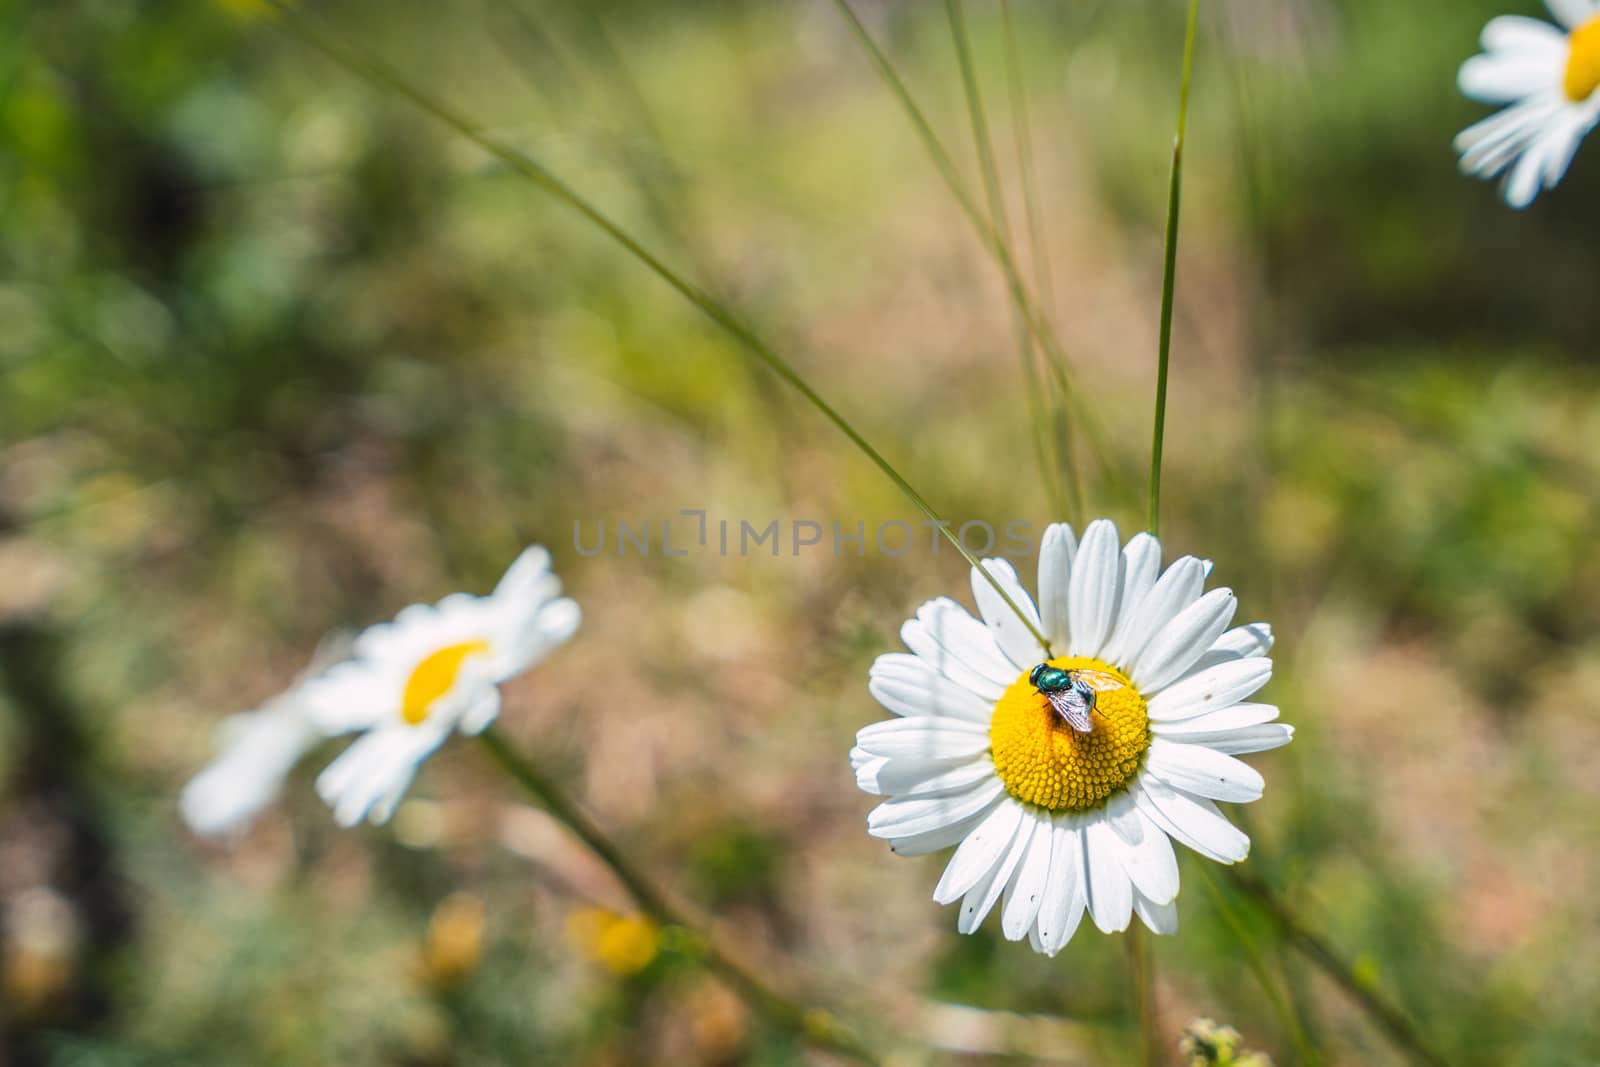 Daisy flower with green fly Phaenicia sericata by Dumblinfilms